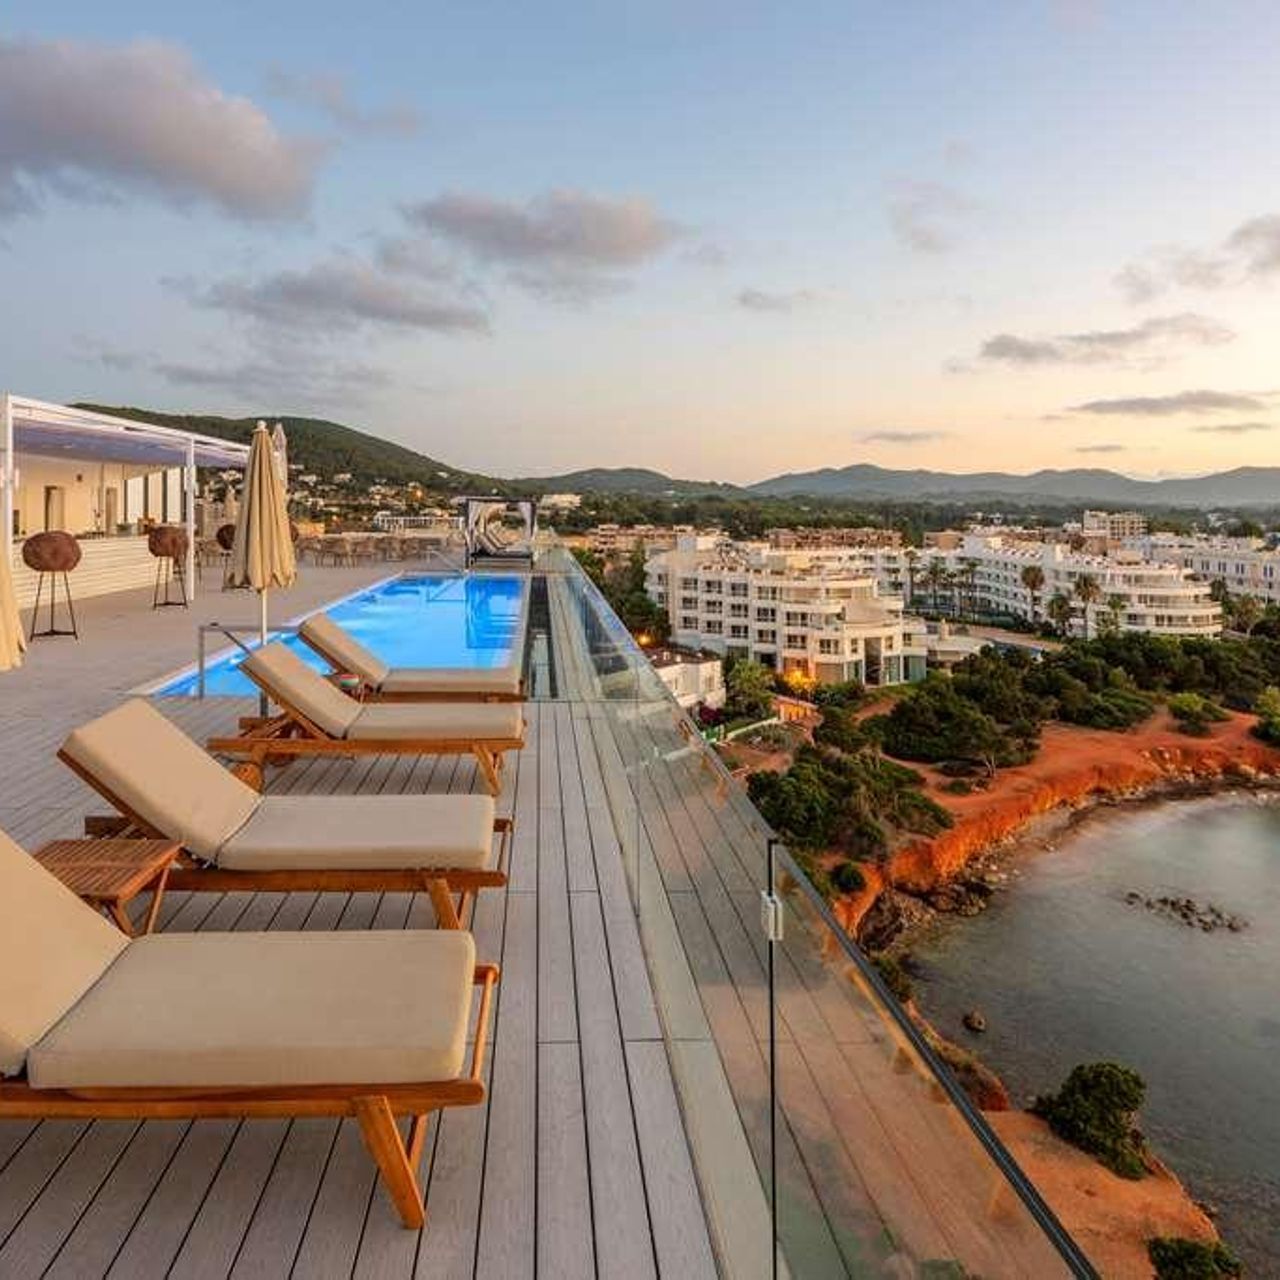 Hotel Sol Beach House Ibiza - Santa Eulària des Riu - HOTEL INFO